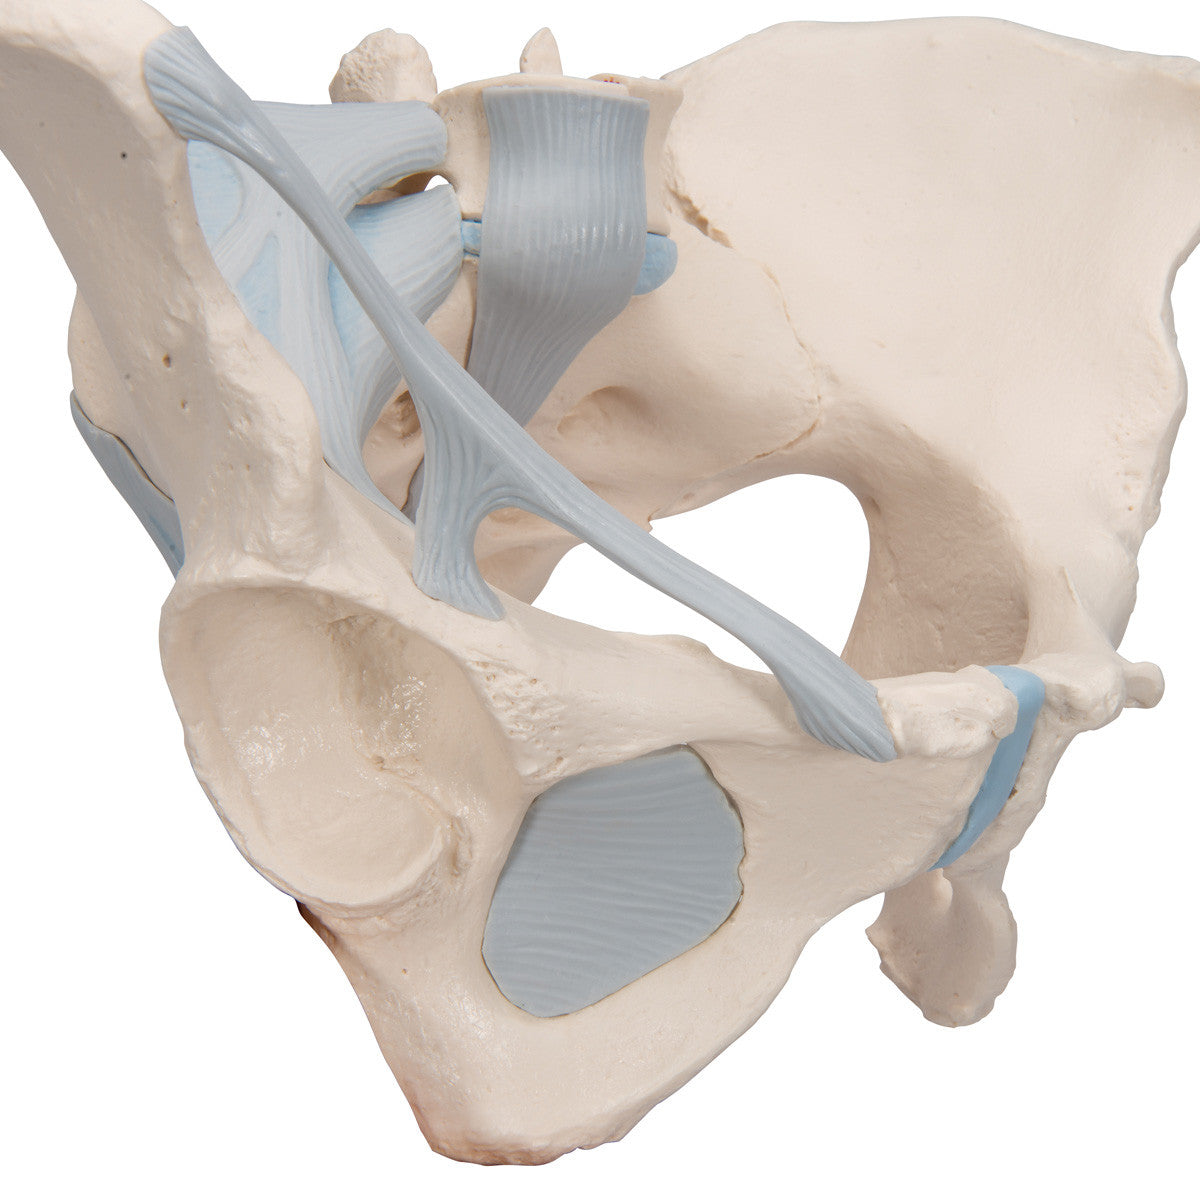 Female Pelvis Skeleton Model with Ligaments, 3 part - detail